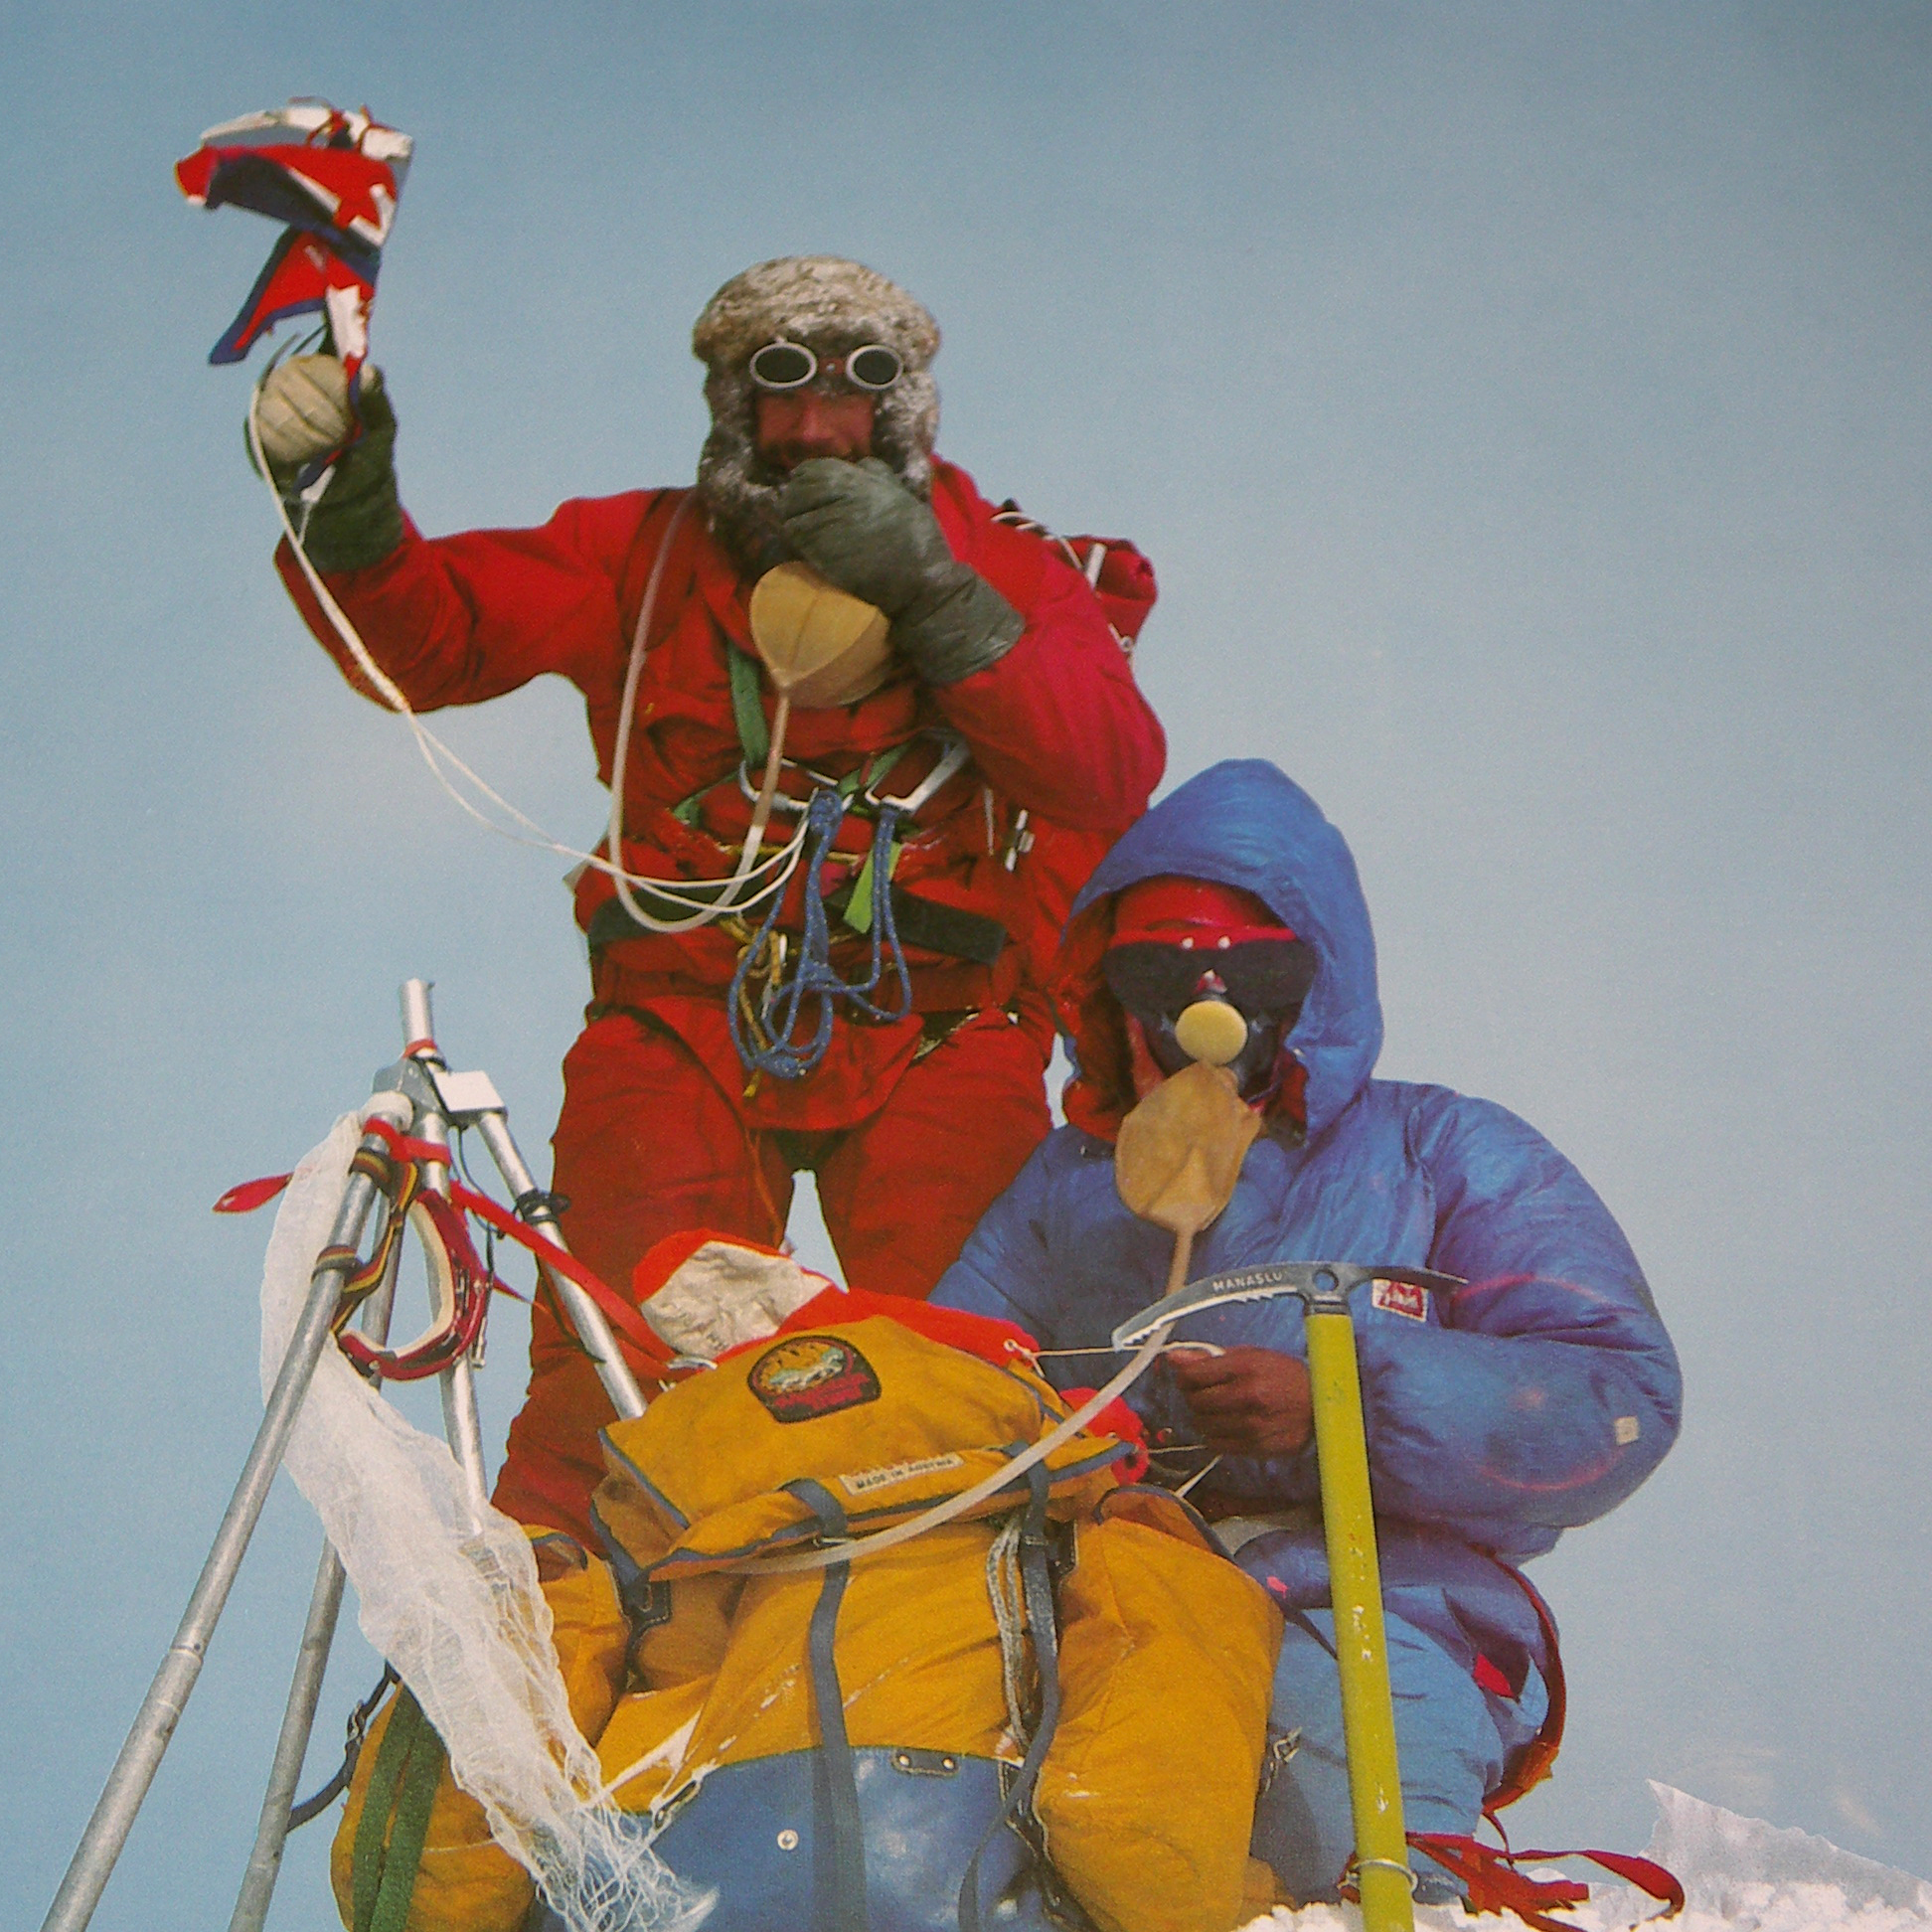 40 let slovenskega Everesta